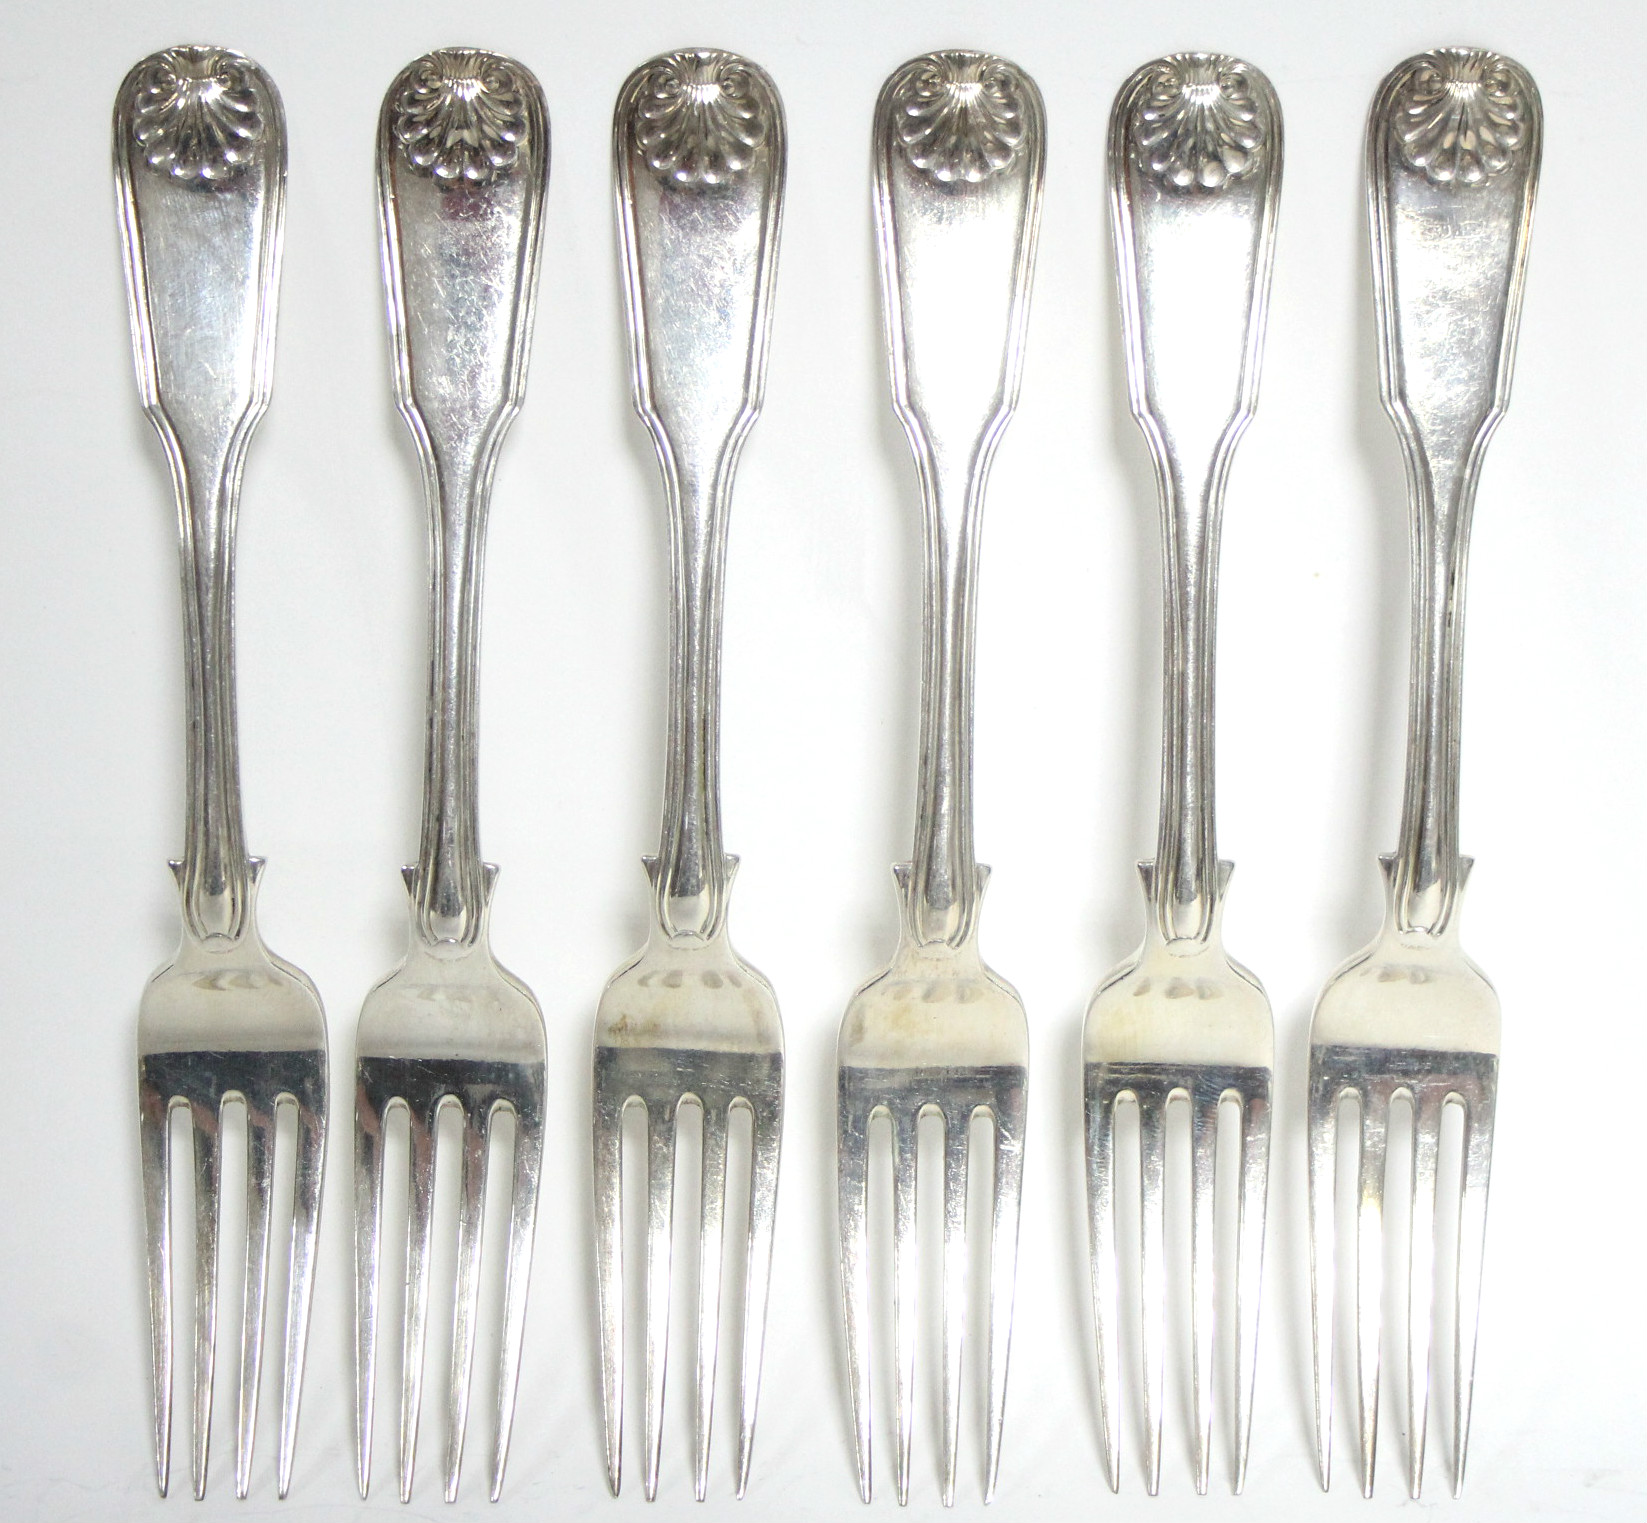 Six Scottish William IV Fiddle, Shell, & Thread pattern dessert forks; Edinburgh 1833, by Marshall &